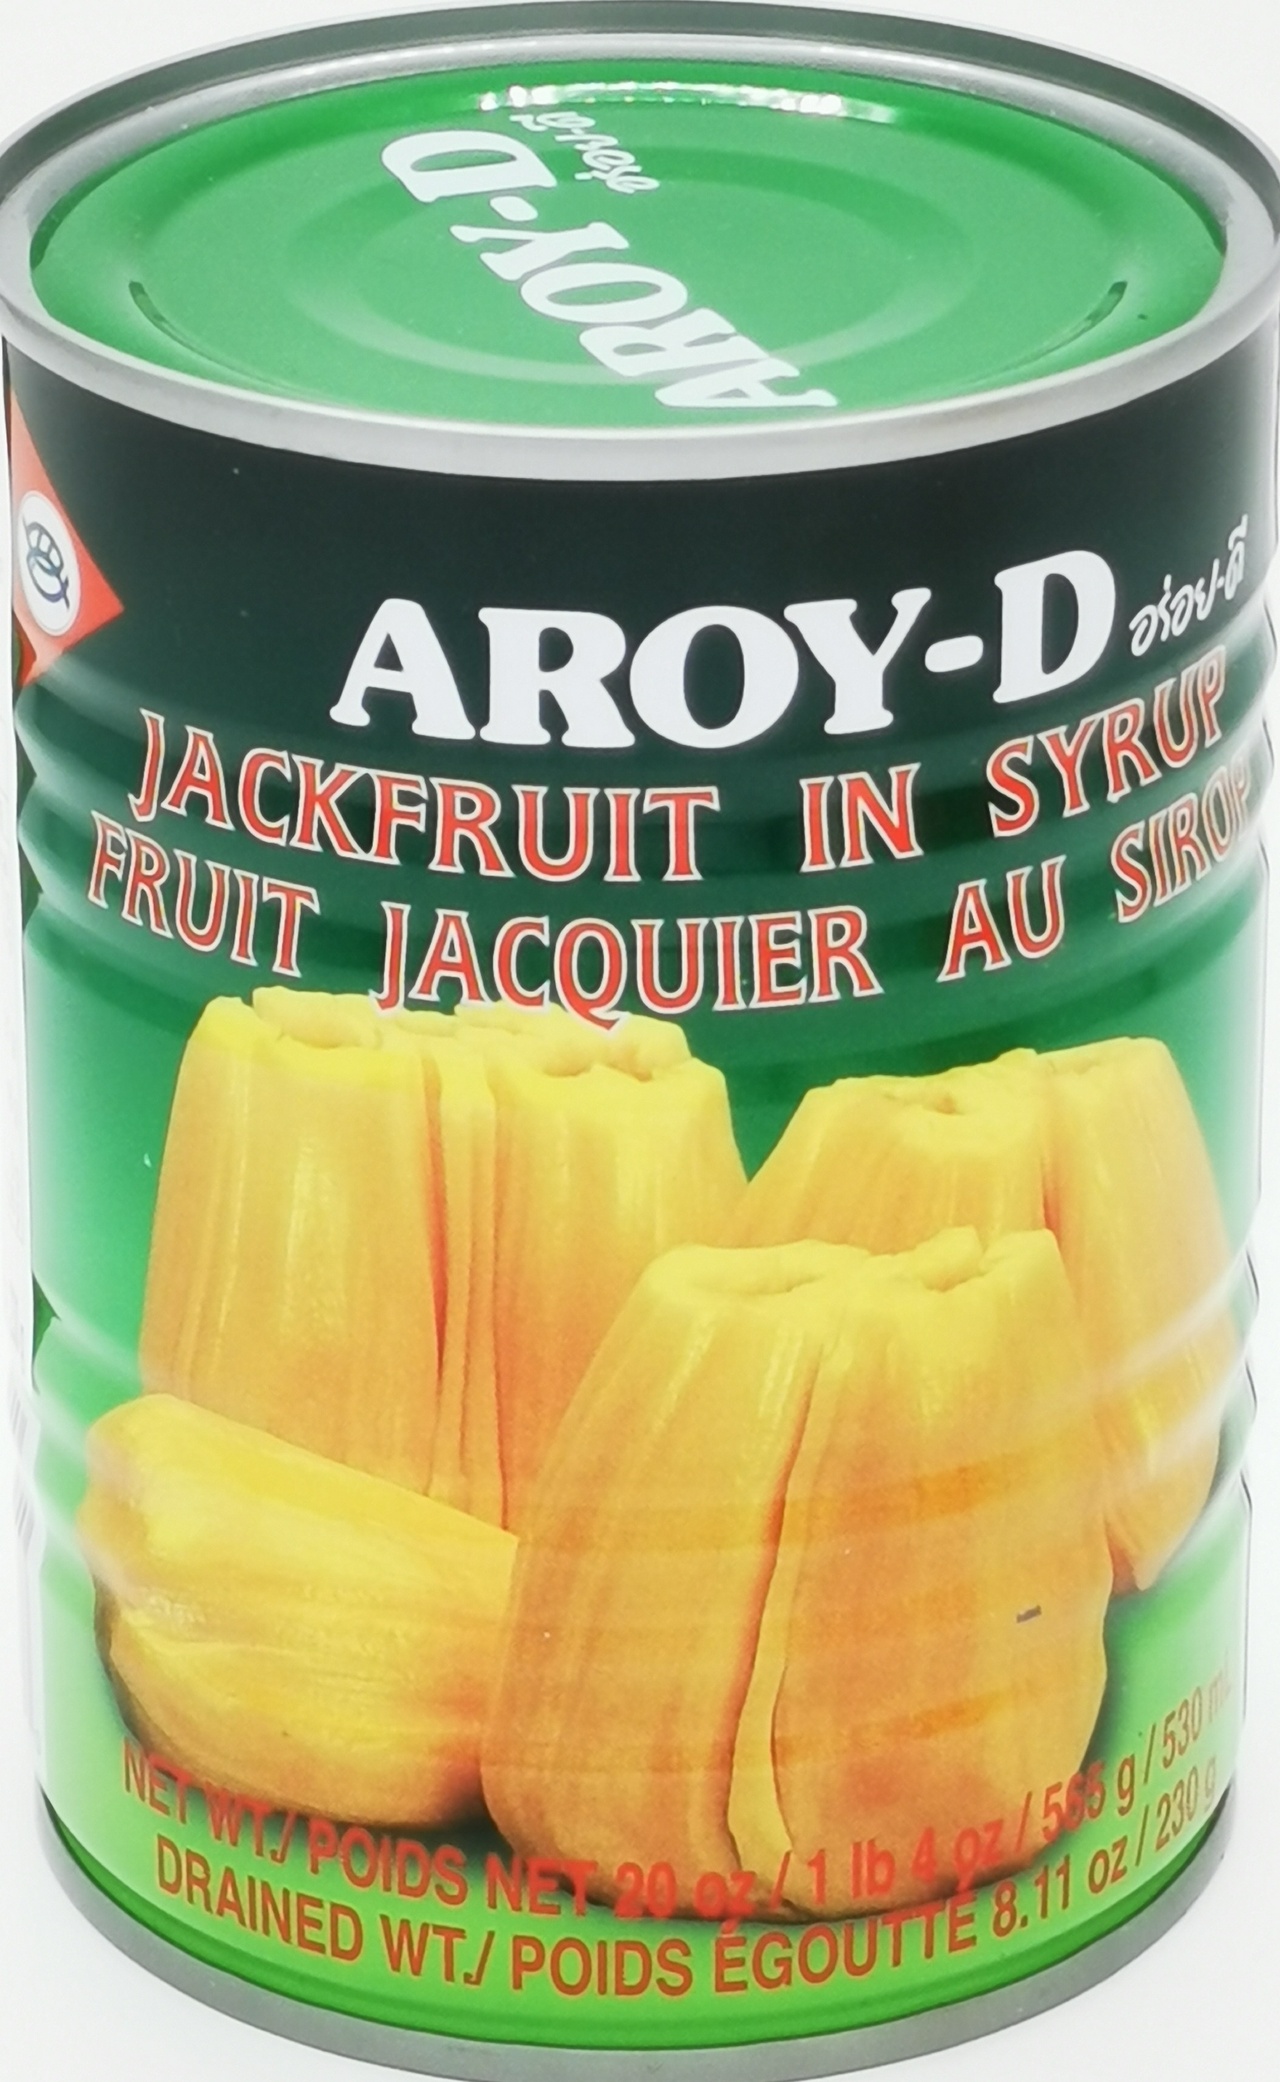 AROY-D JACKFRUIT I SIRAP  565g